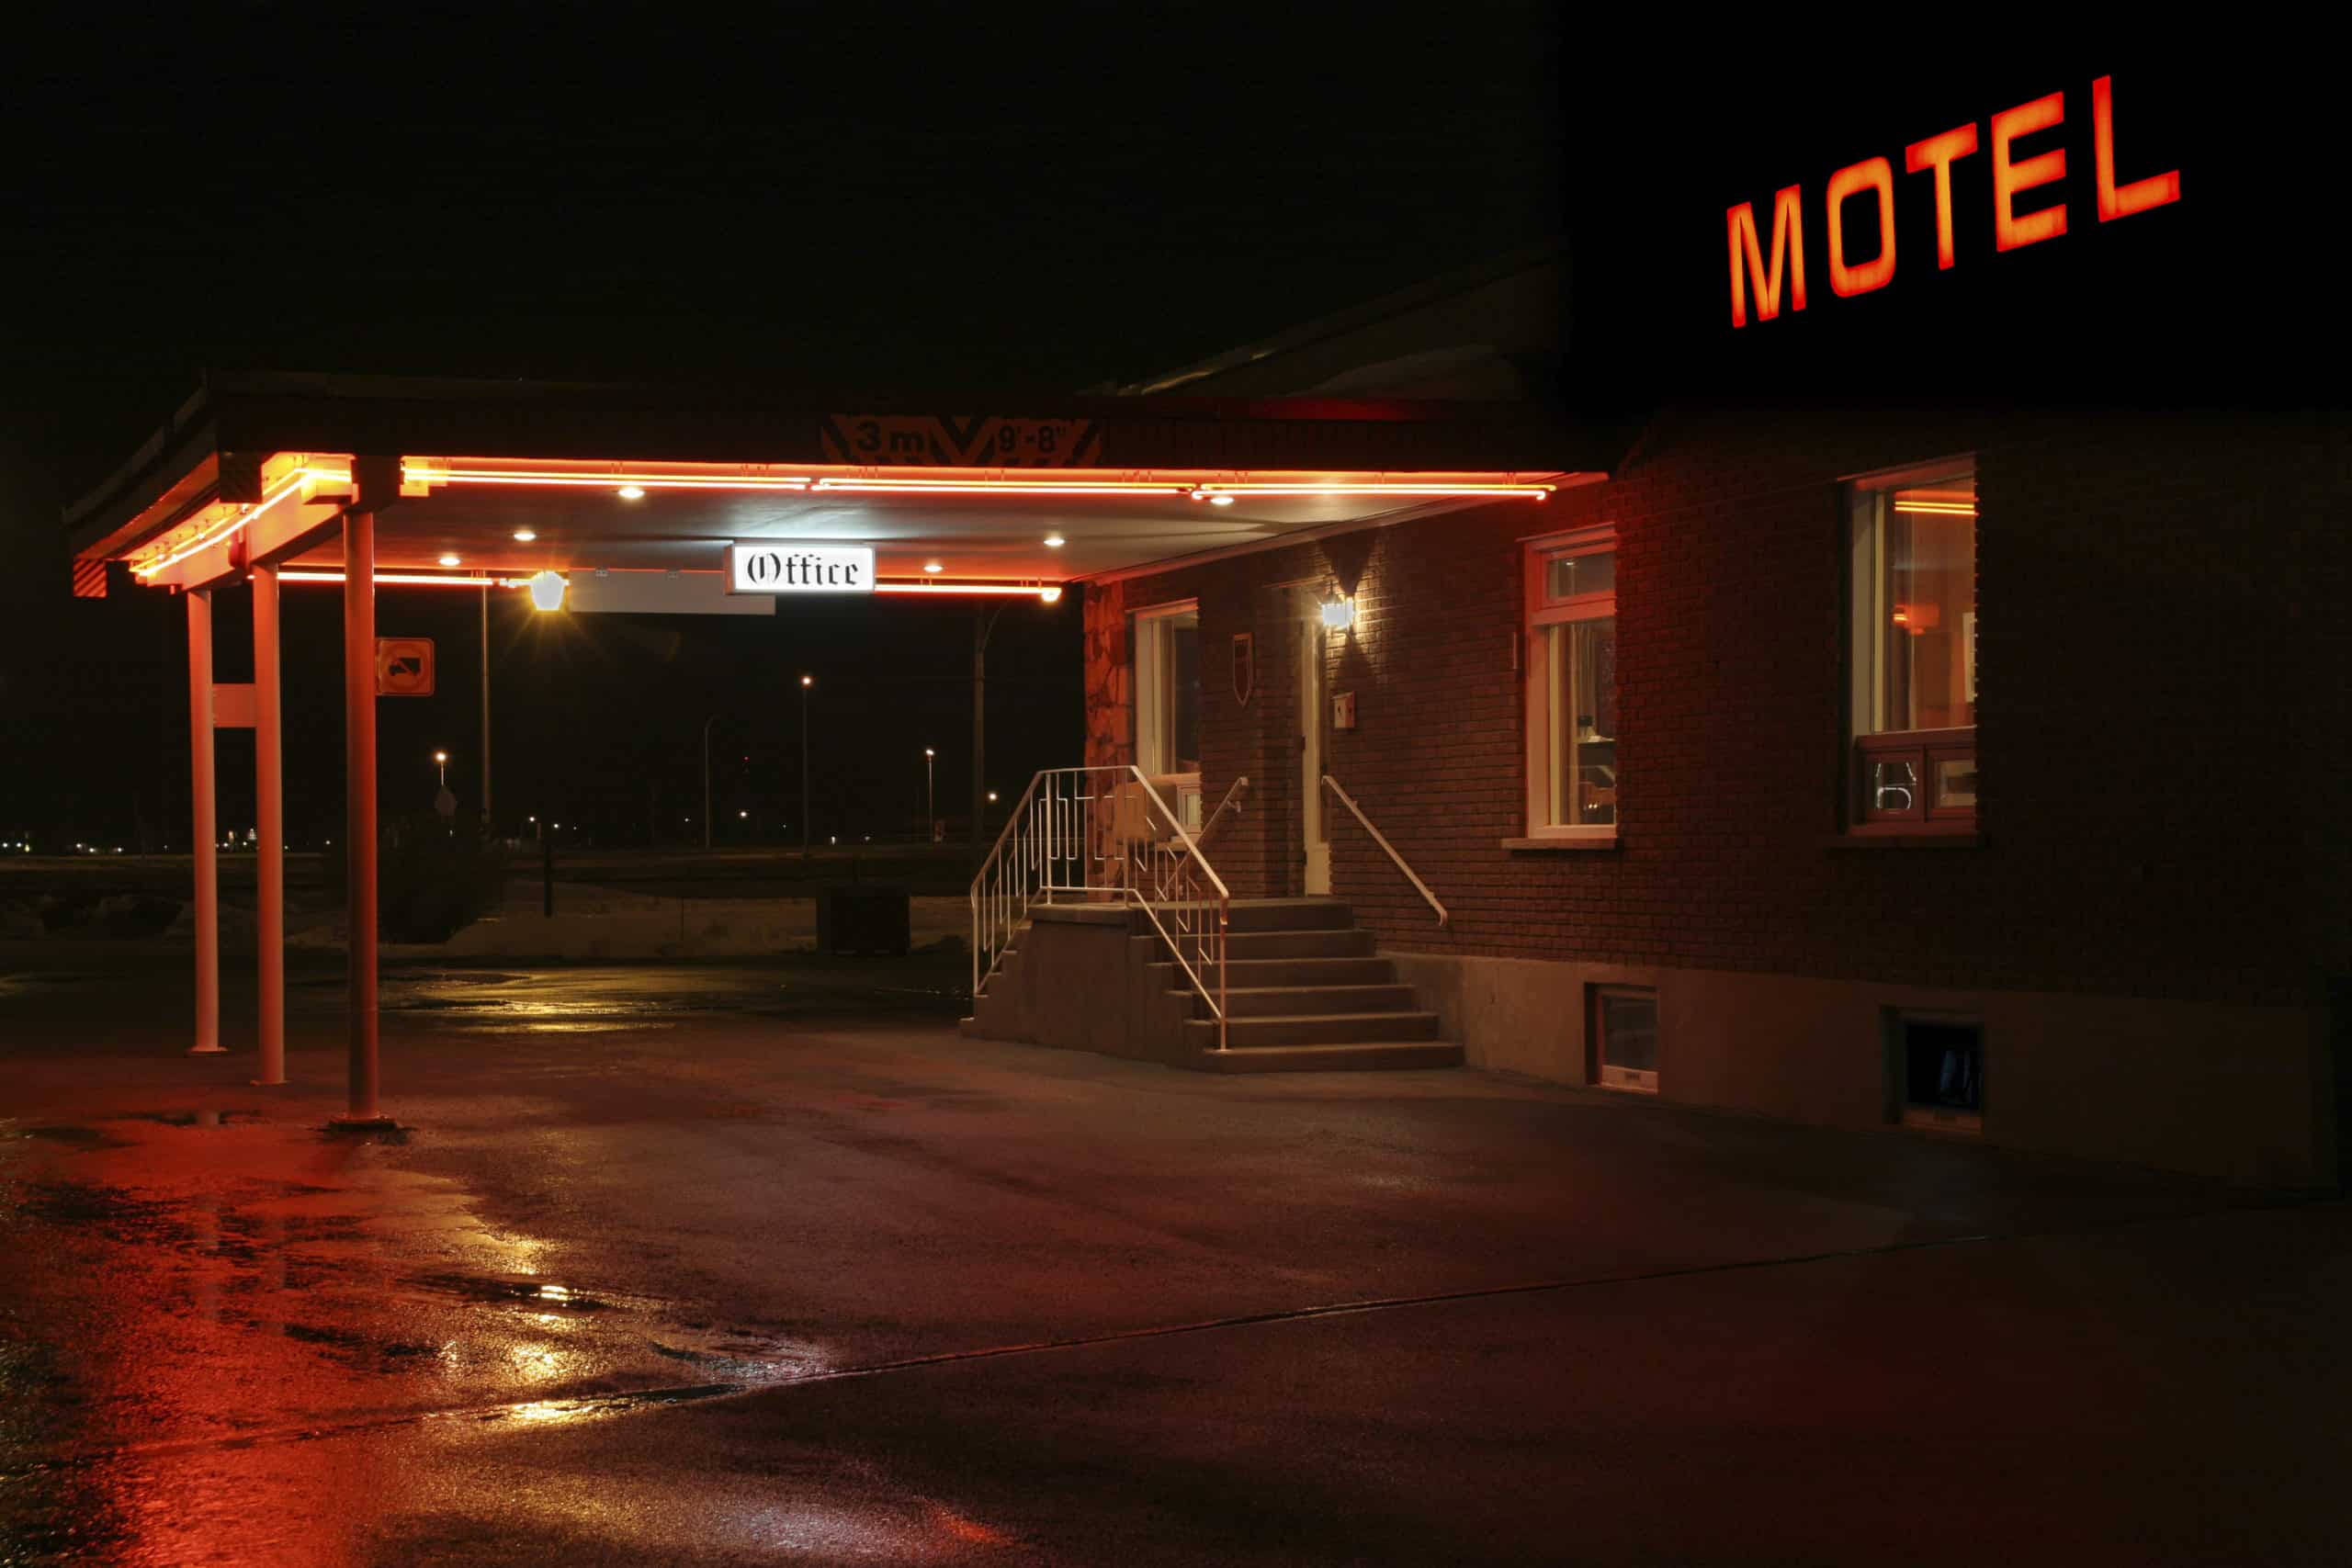 Motel entrance at night